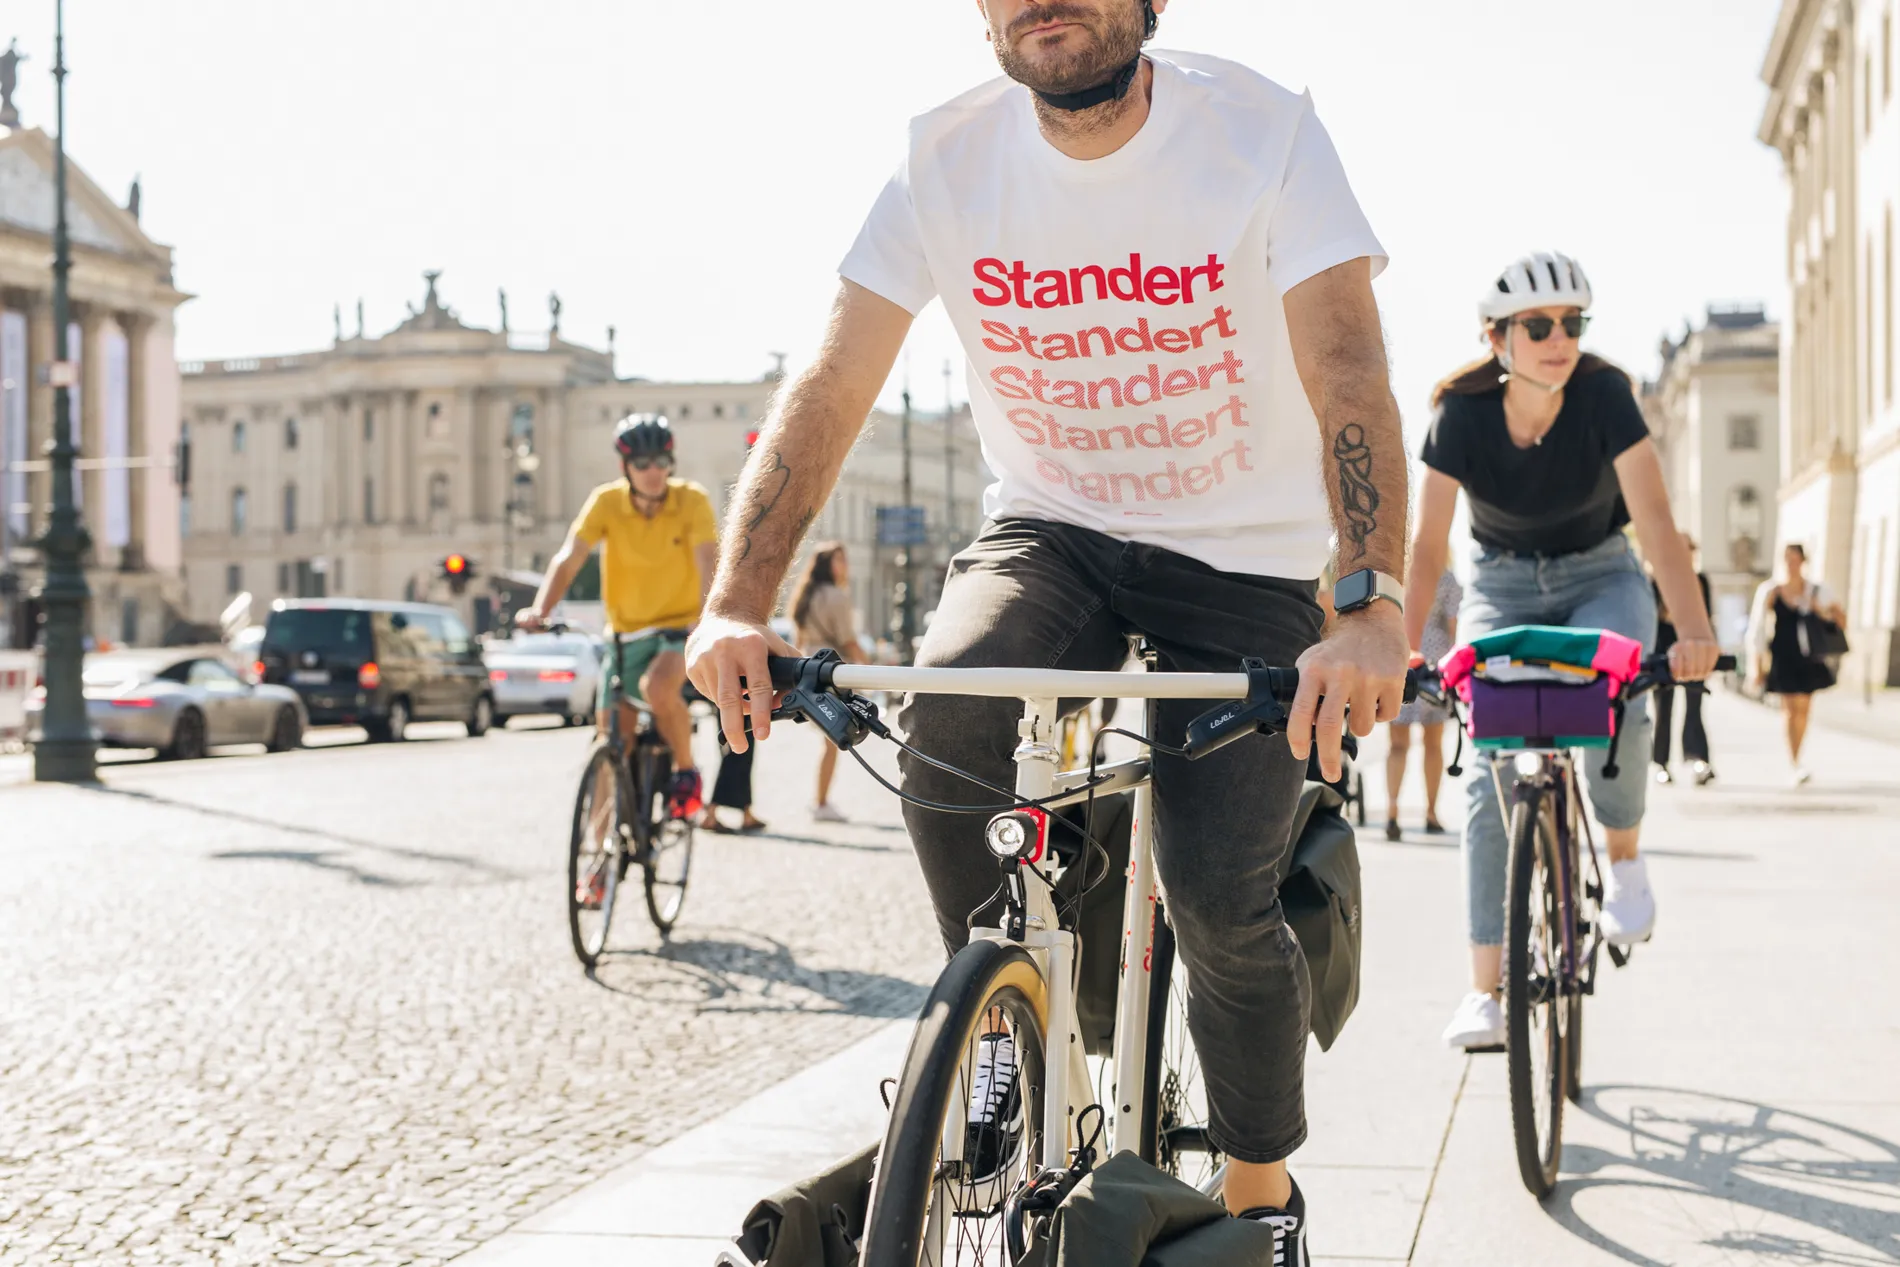 Bürgermeisterin Commuter and Touring Bikes